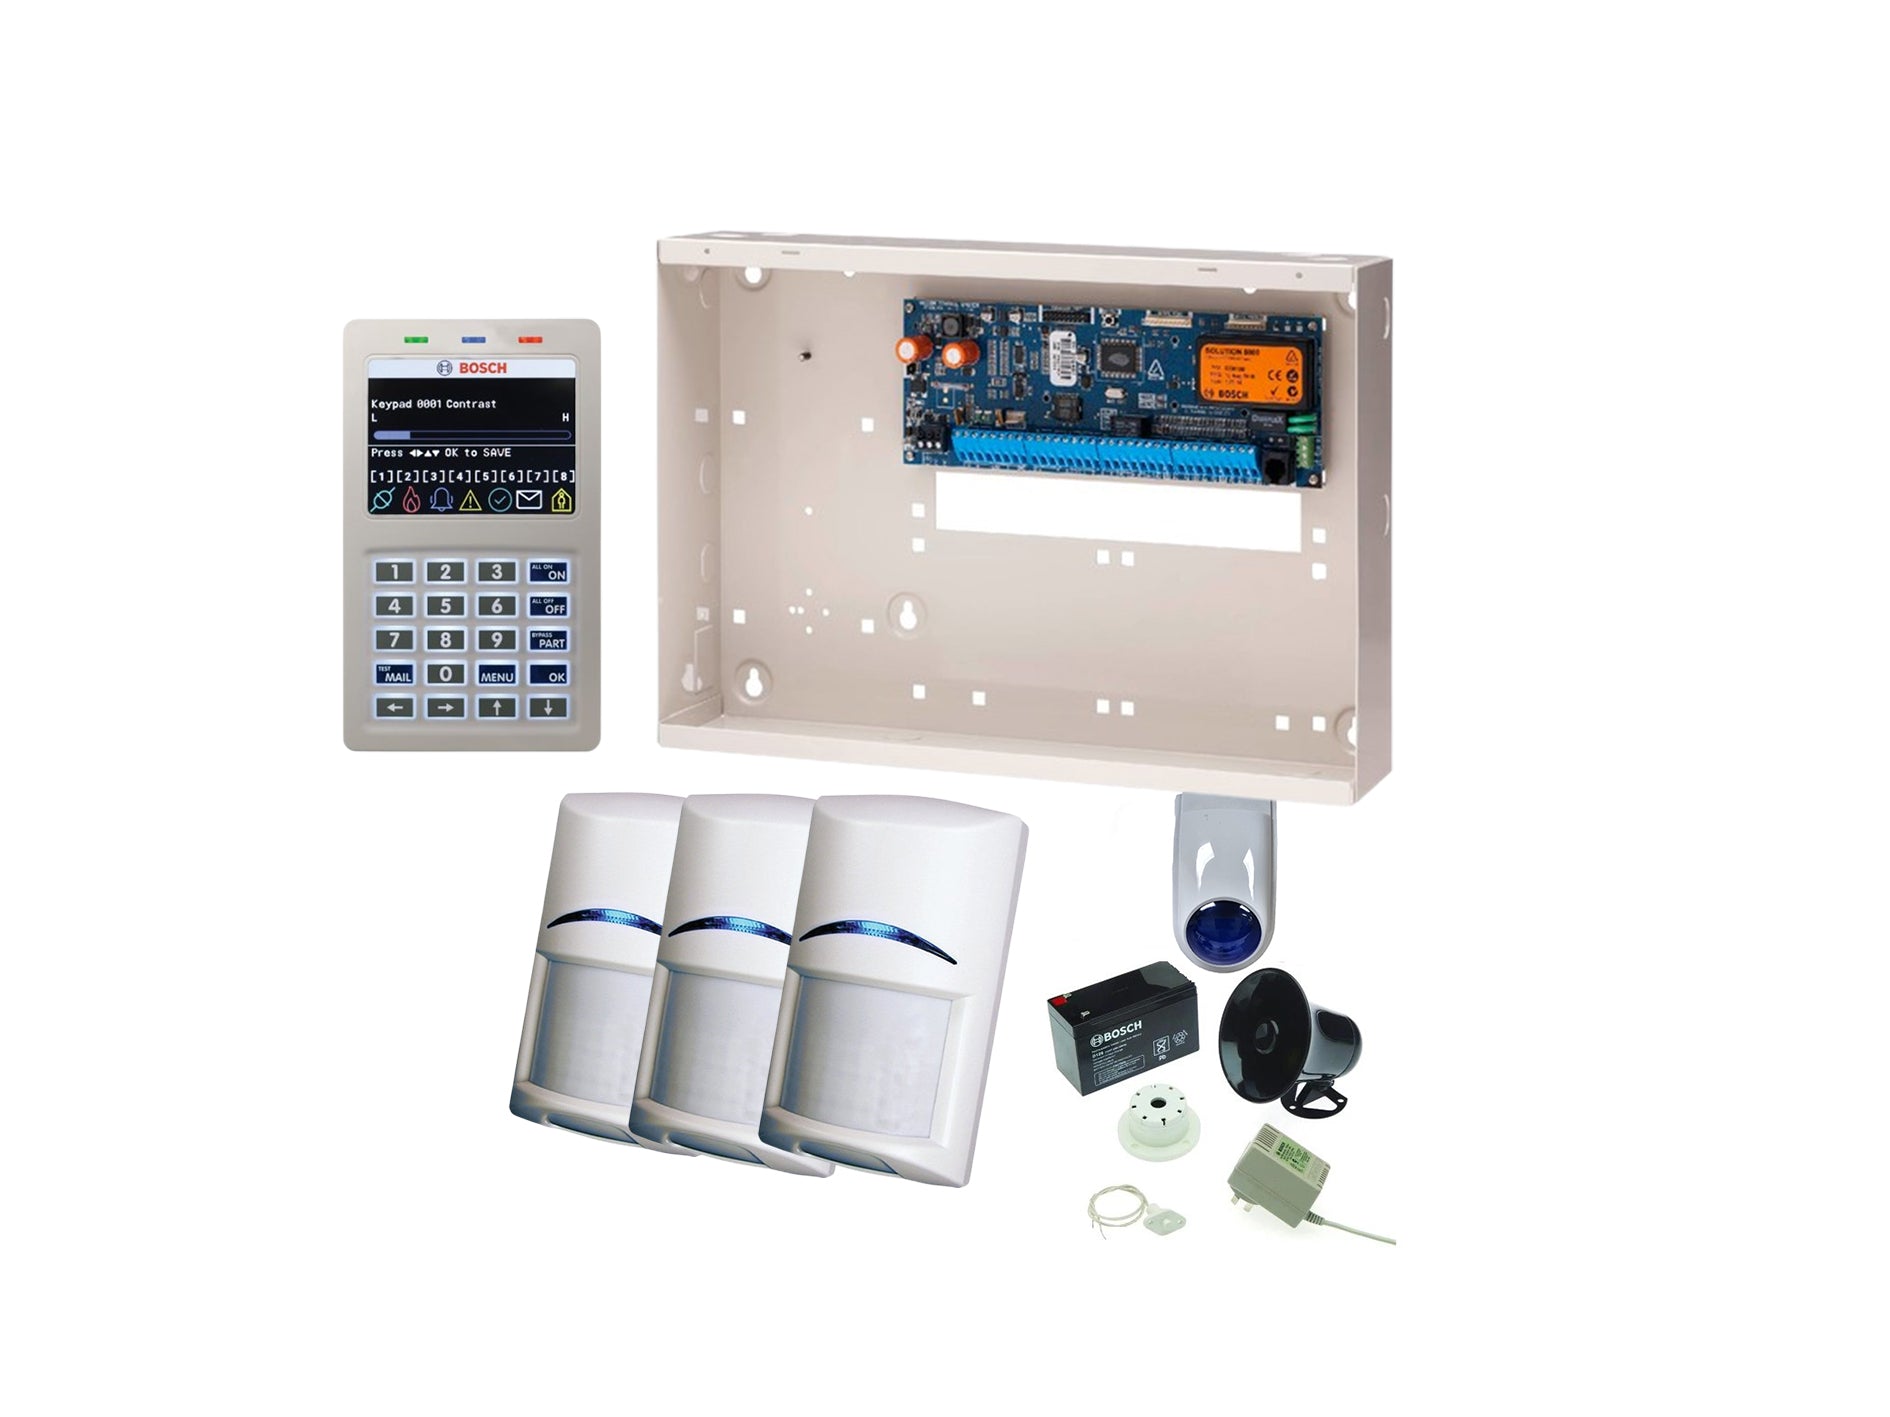 BOSCH, Solution 6000, Alarm kit, + CC610PB panel, CP736B Smart Prox LCD keypad, 3x Pro PIR detectors + Accessories Included